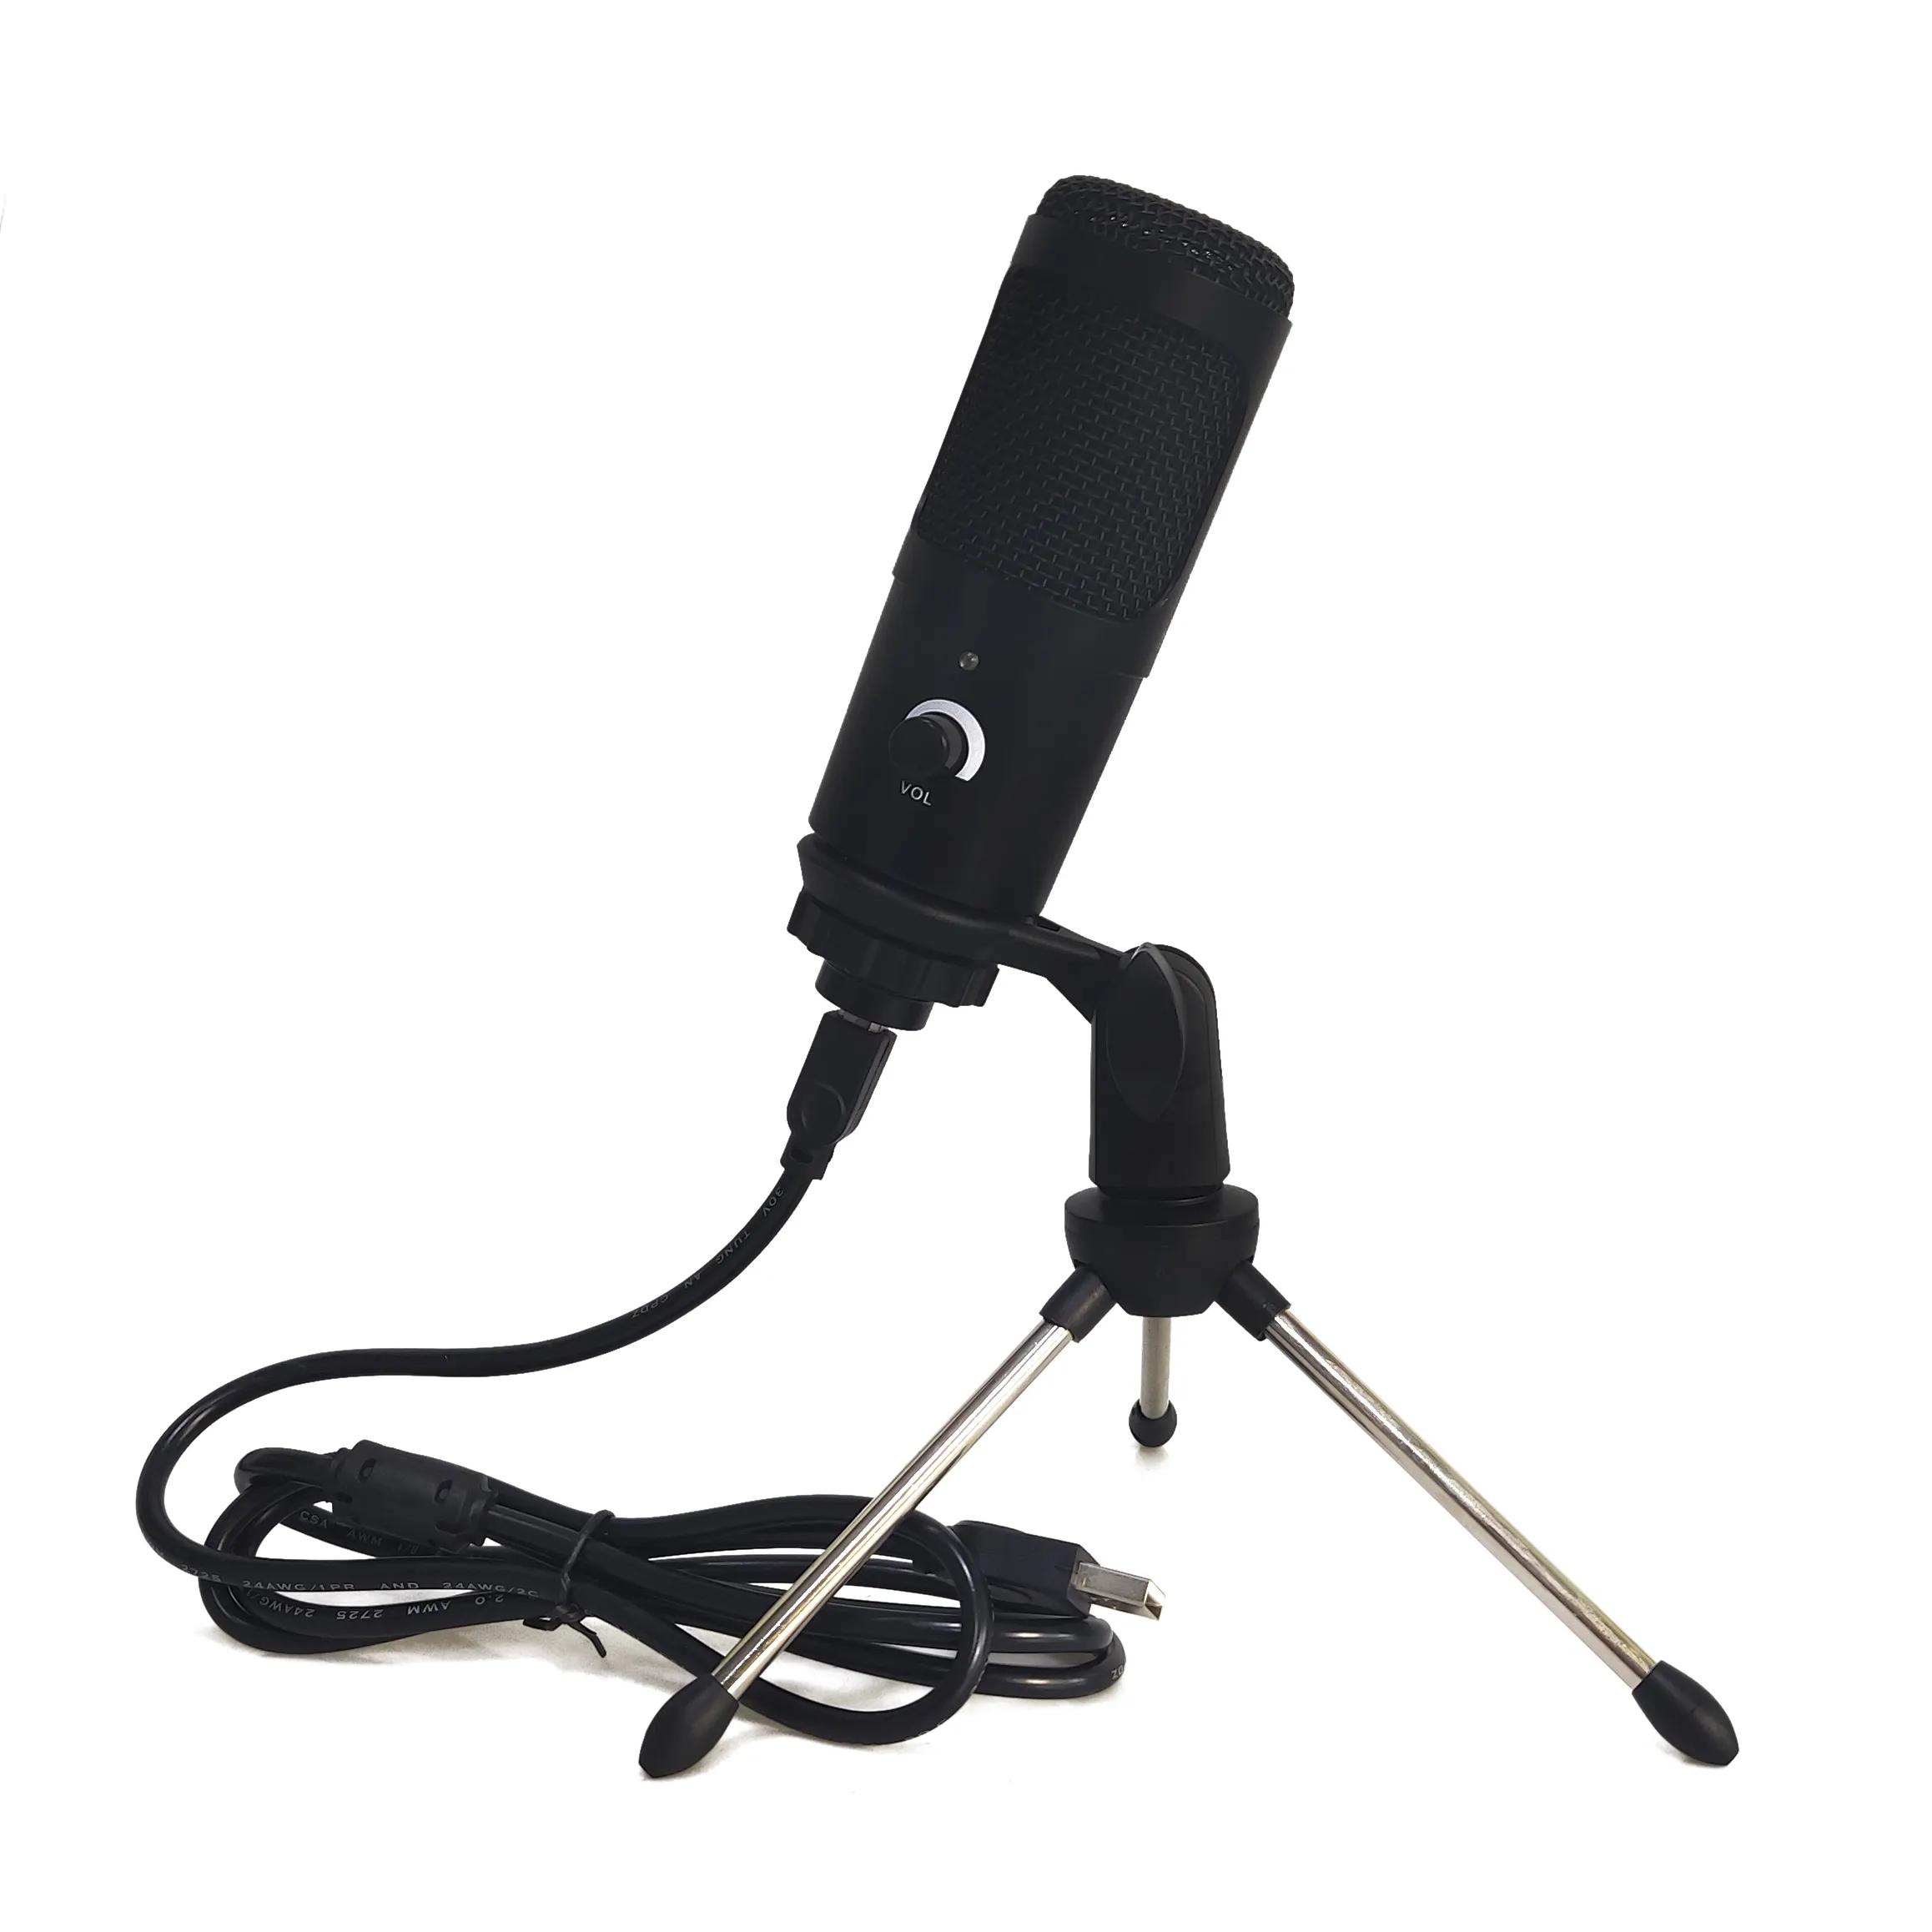 Professional dynamic broadcasting recording studio condenser usb microphone mic microfono desktop computer microphone